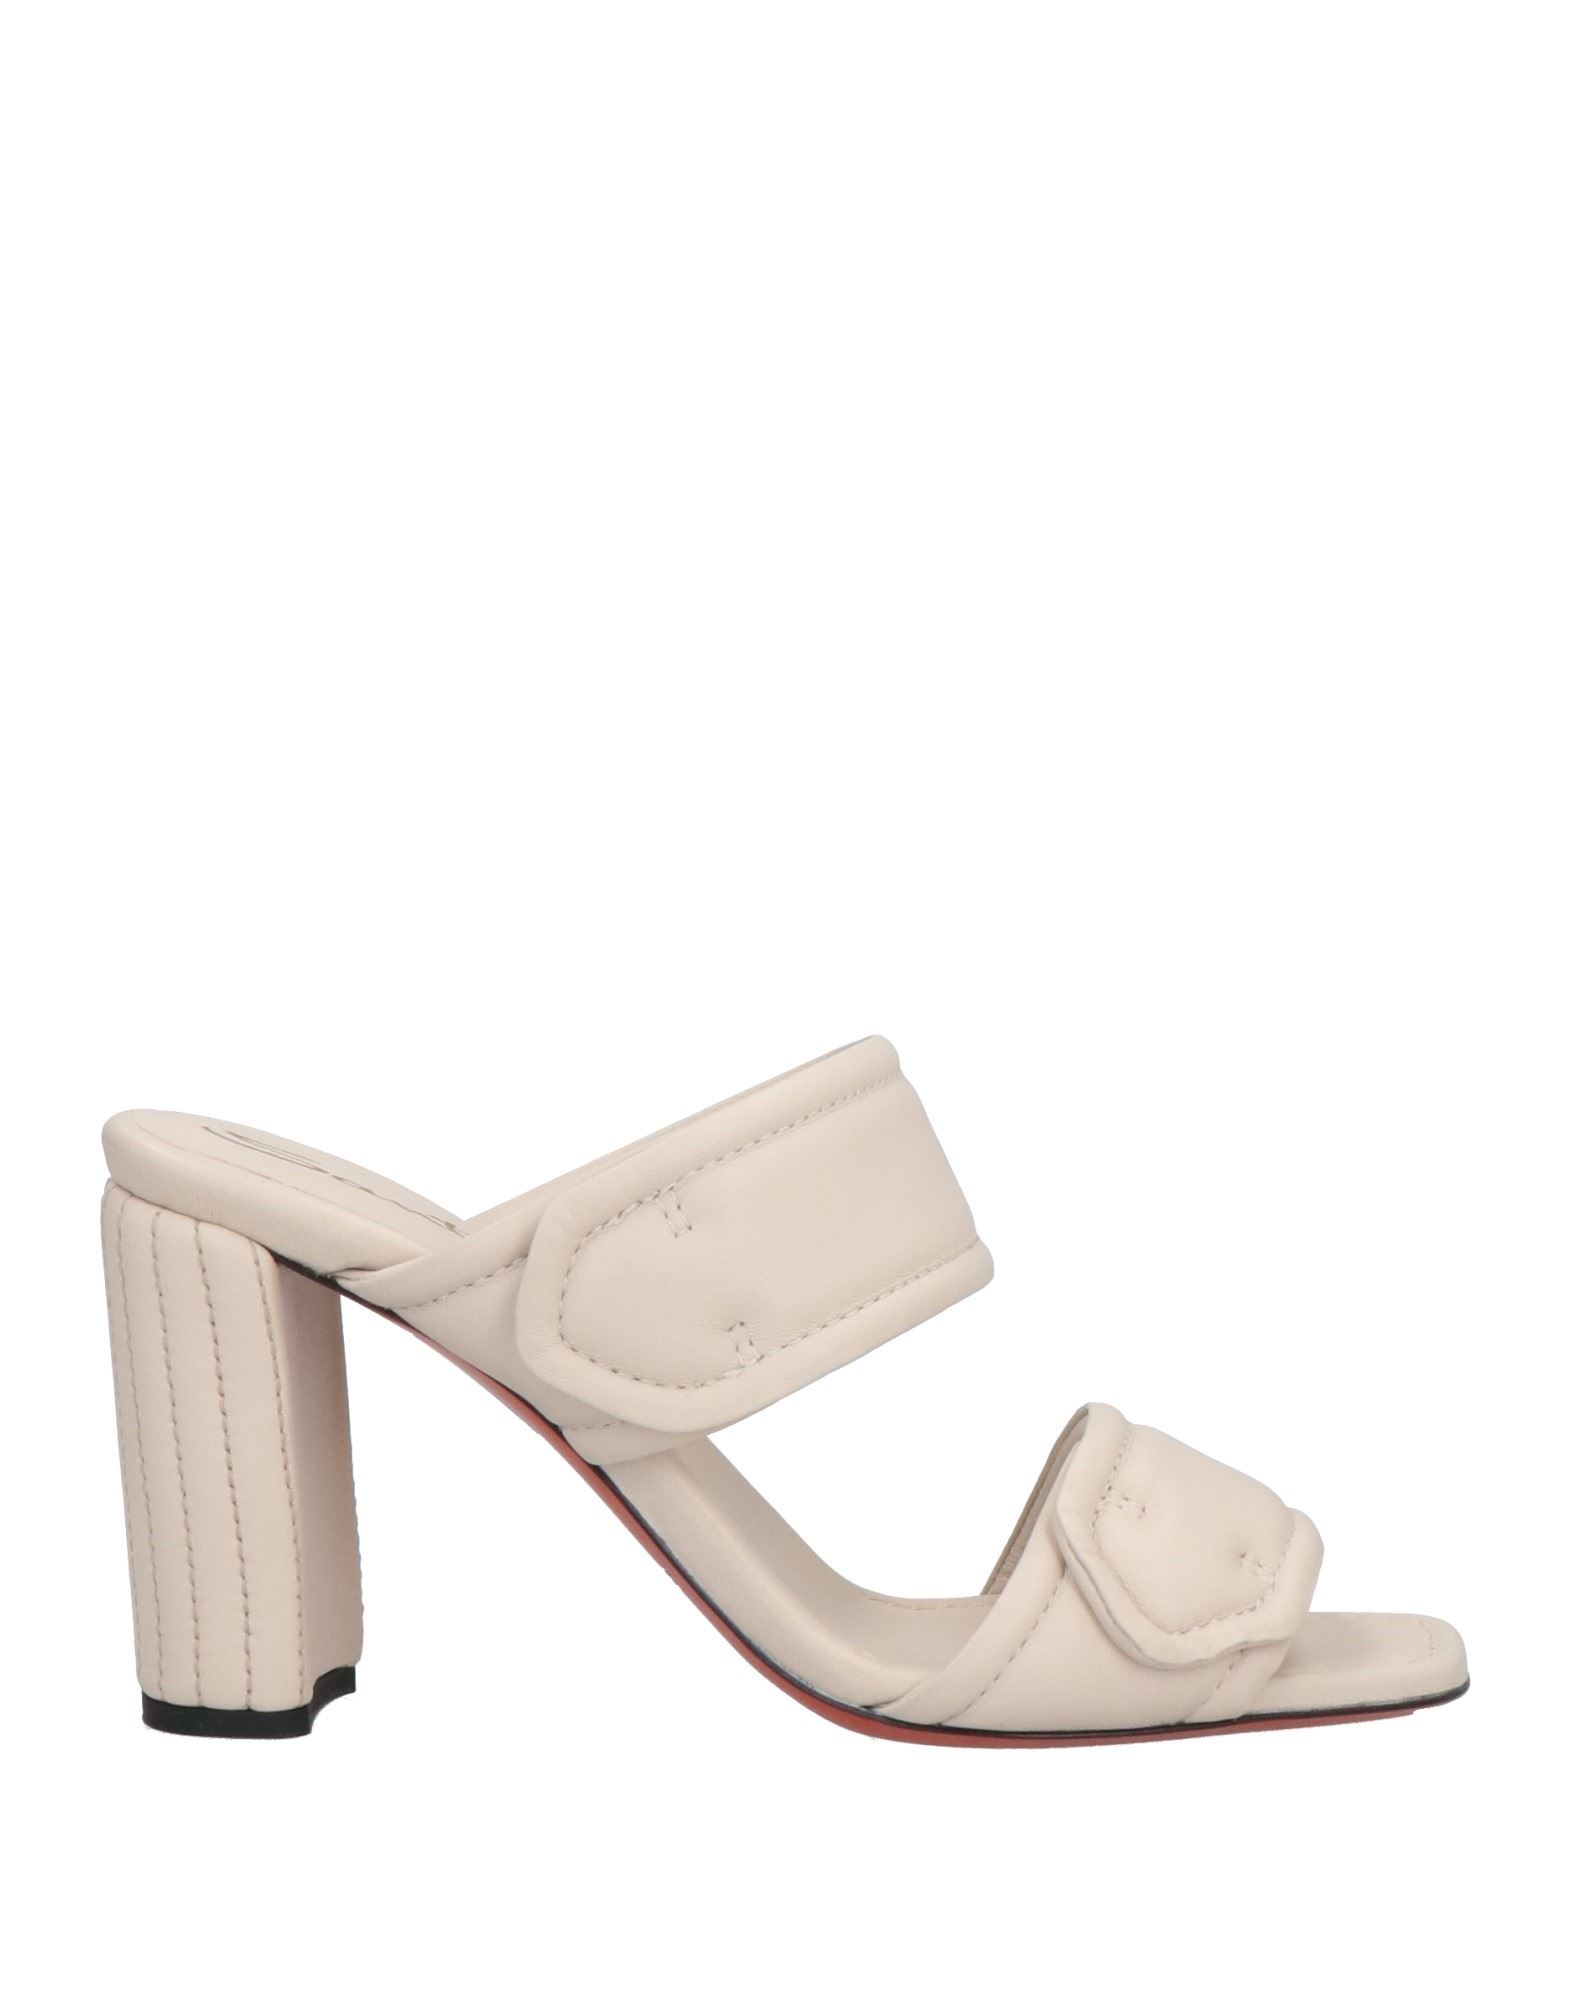 Santoni Sandals In Off White